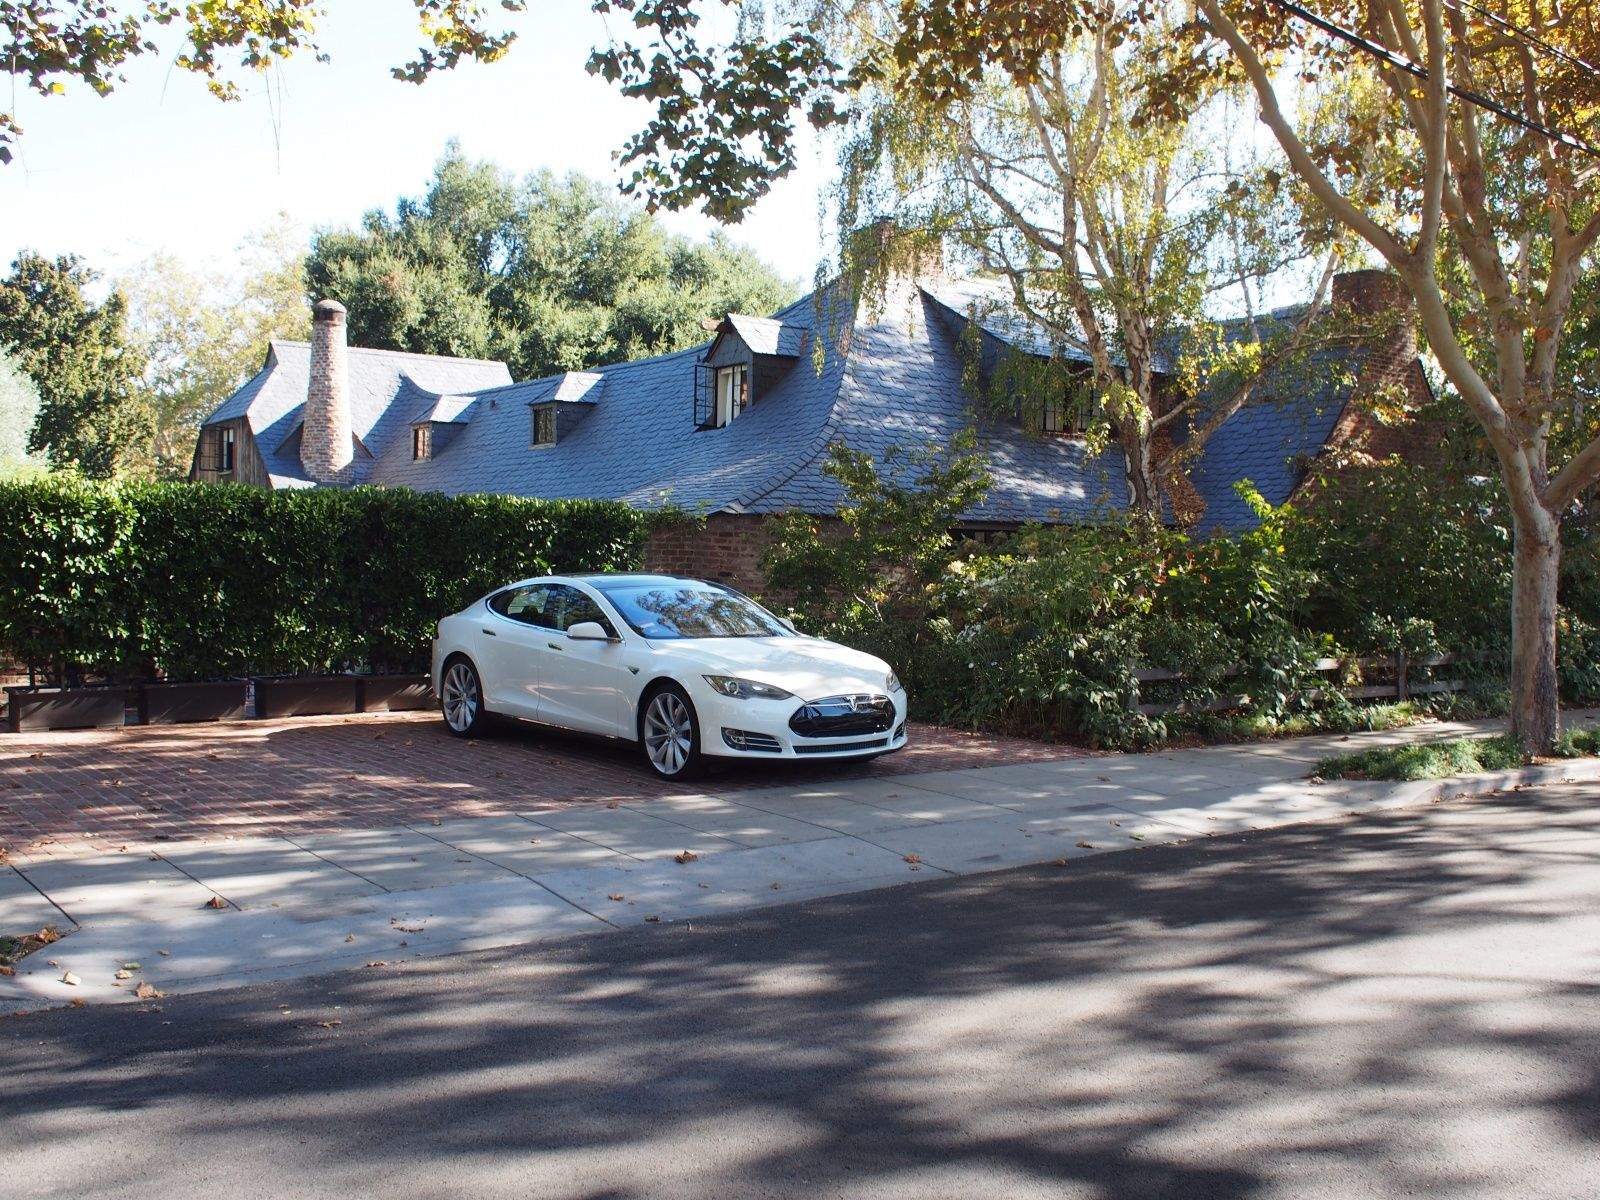 Steve Job's house in Palo Alto. Photo: Leander Kahney/Cult of Mac